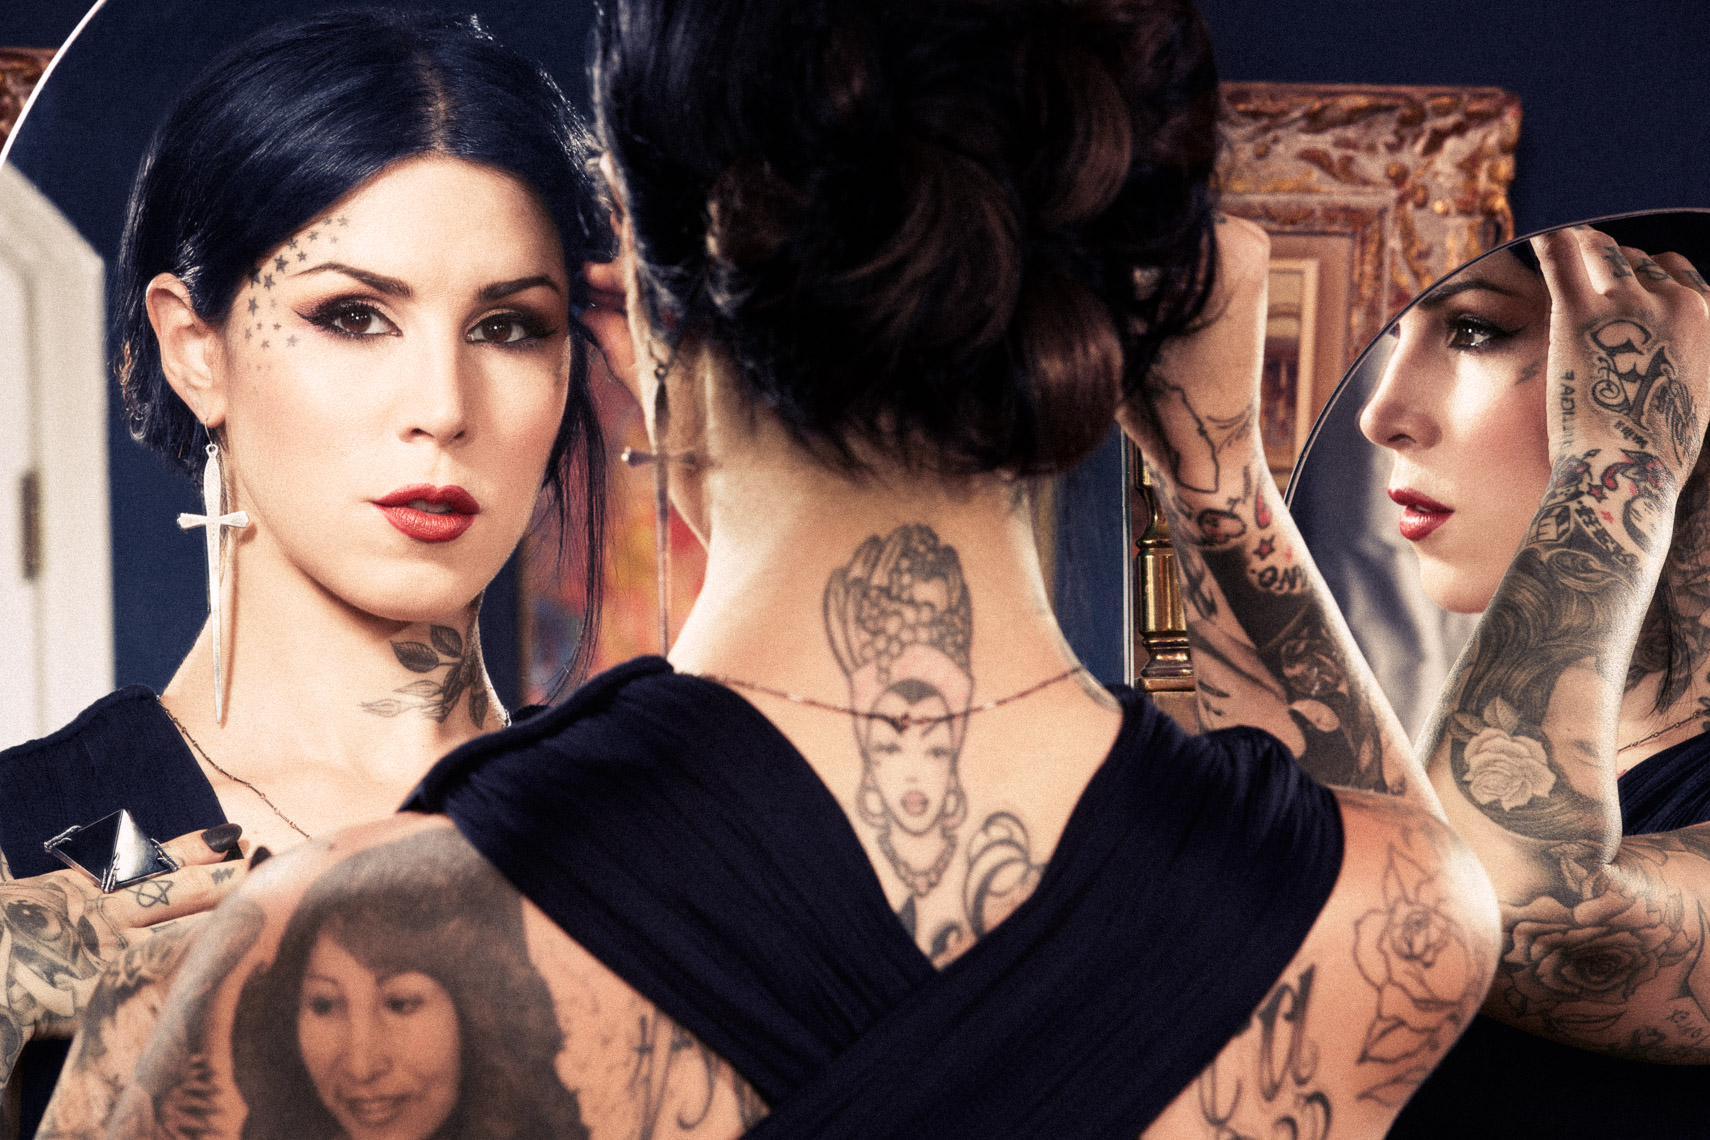 People 1710x1140 Kat Von D women tattoo Tattoo Artist face mirror reflection inked girls